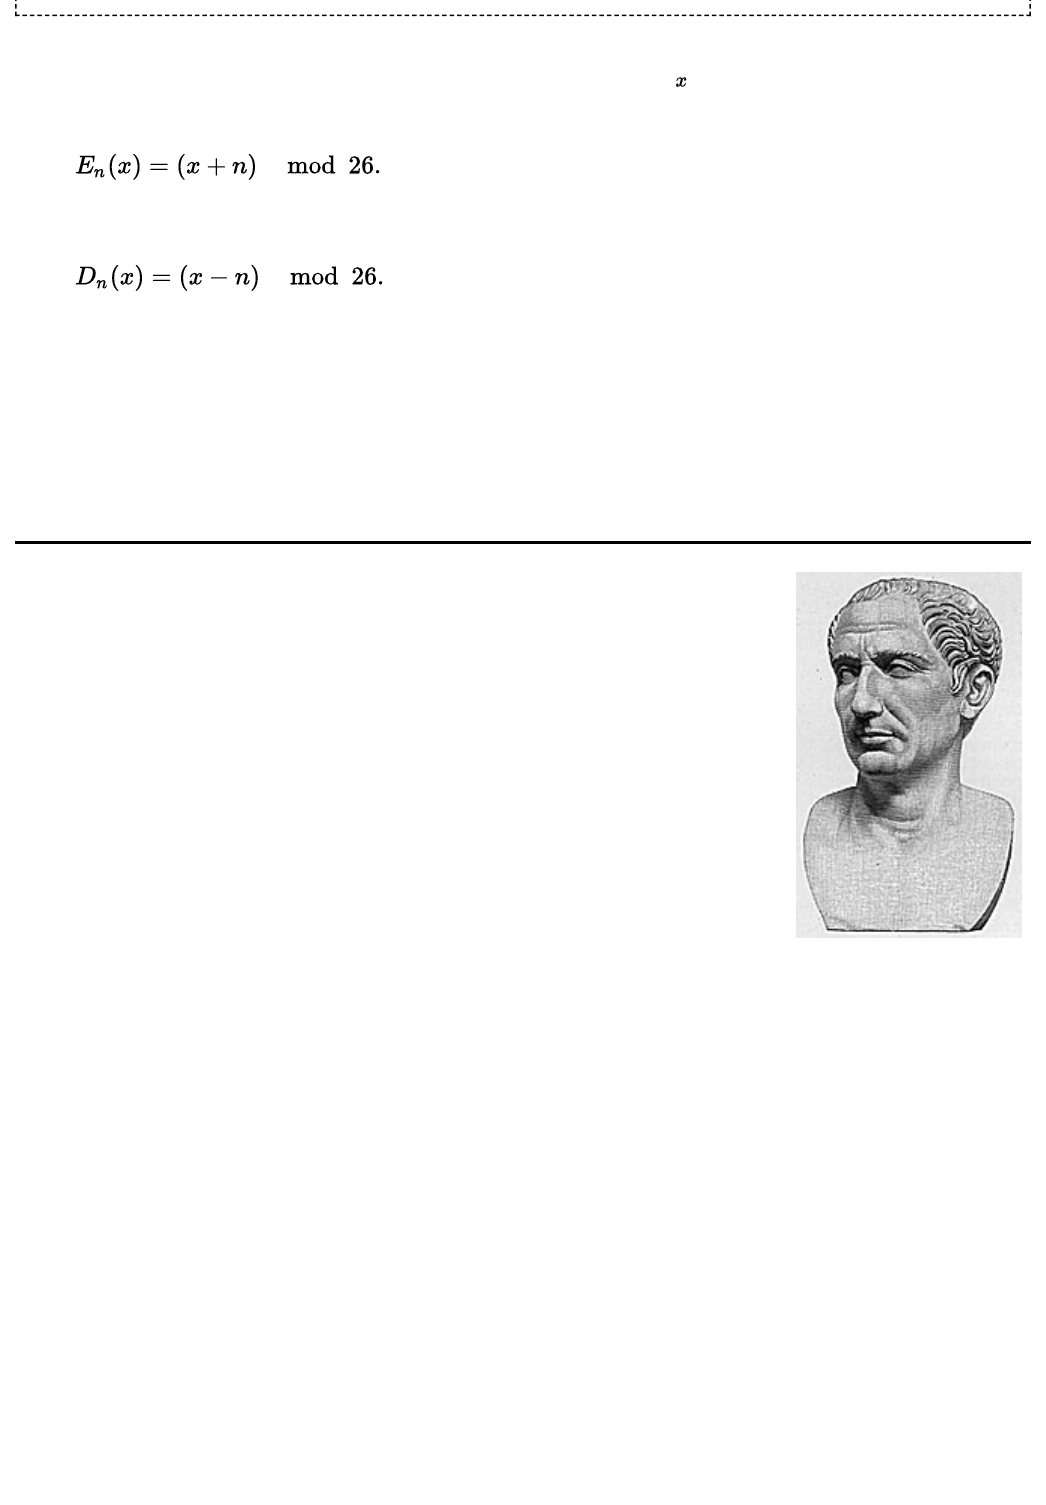 Cifra de César – Wikipédia, a enciclopédia livre